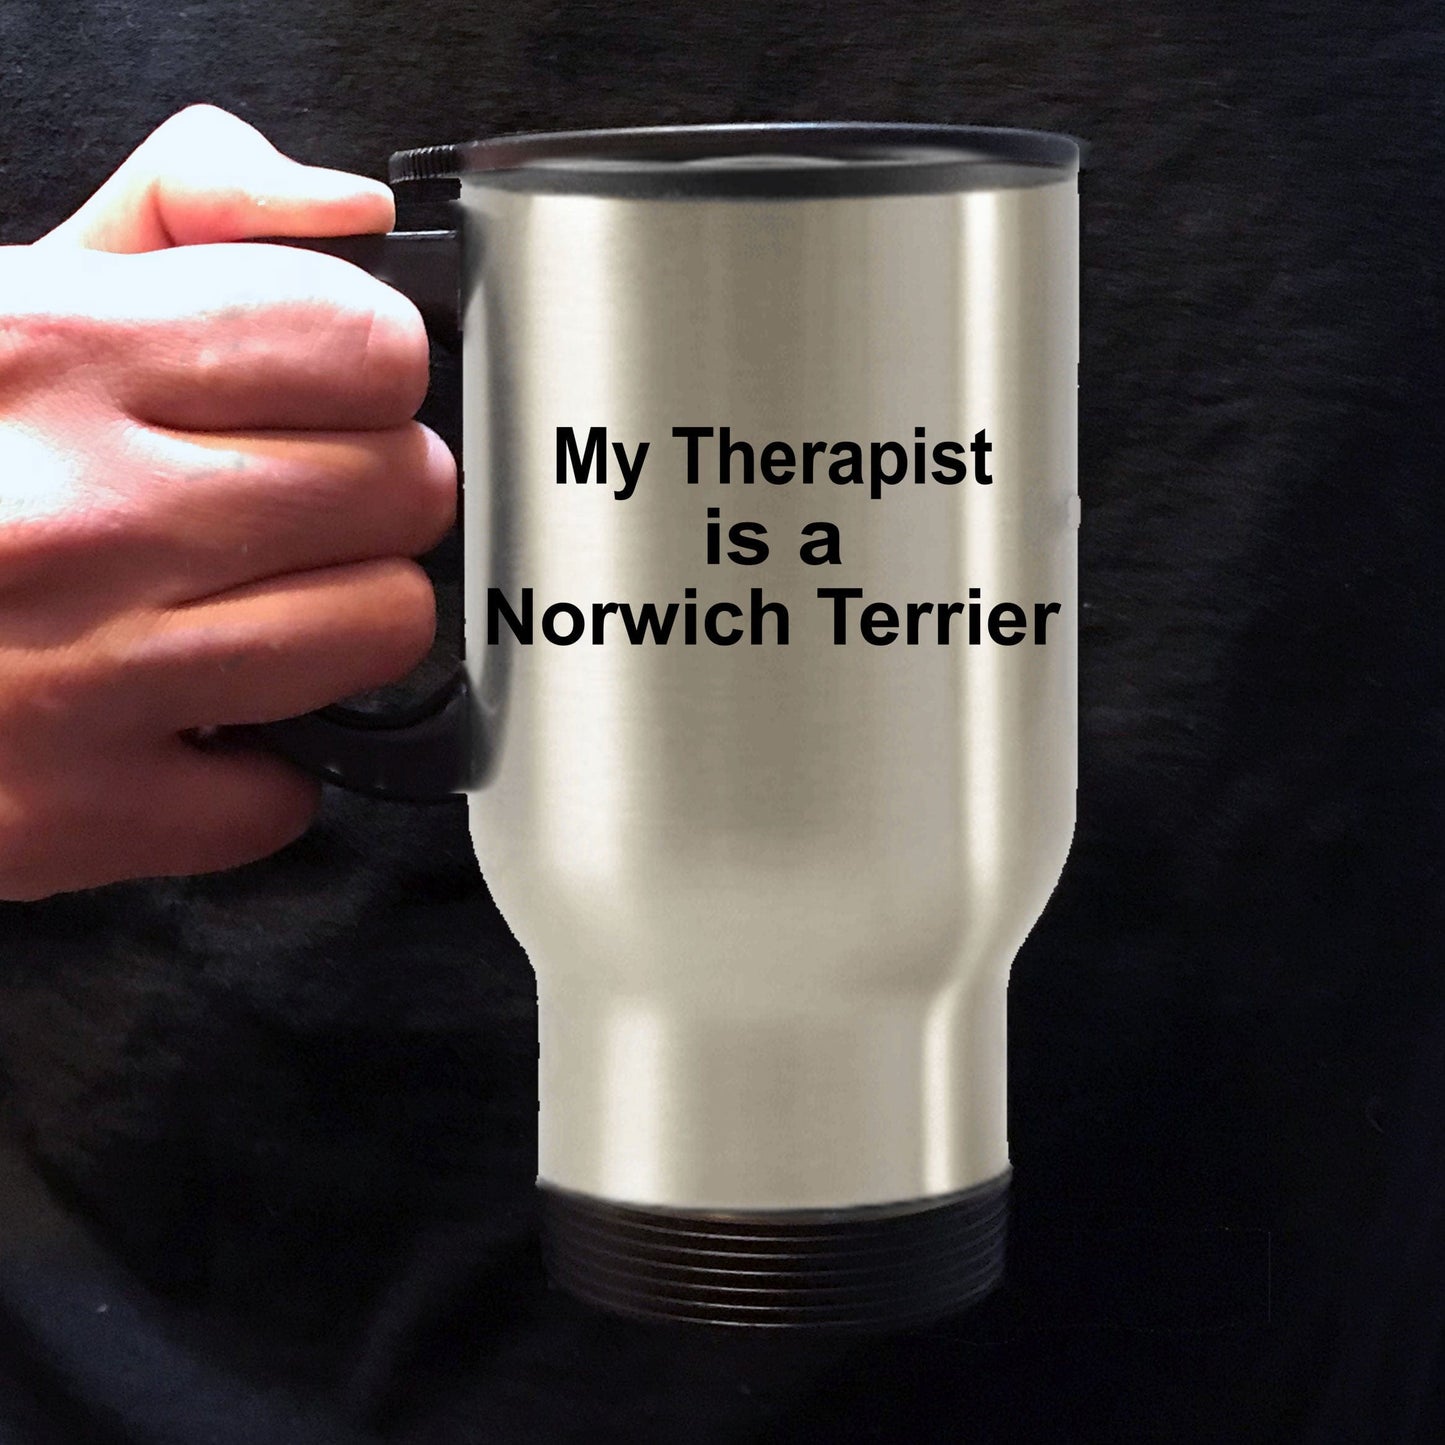 Norwich Terrier Dog Therapist Travel Coffee Mug